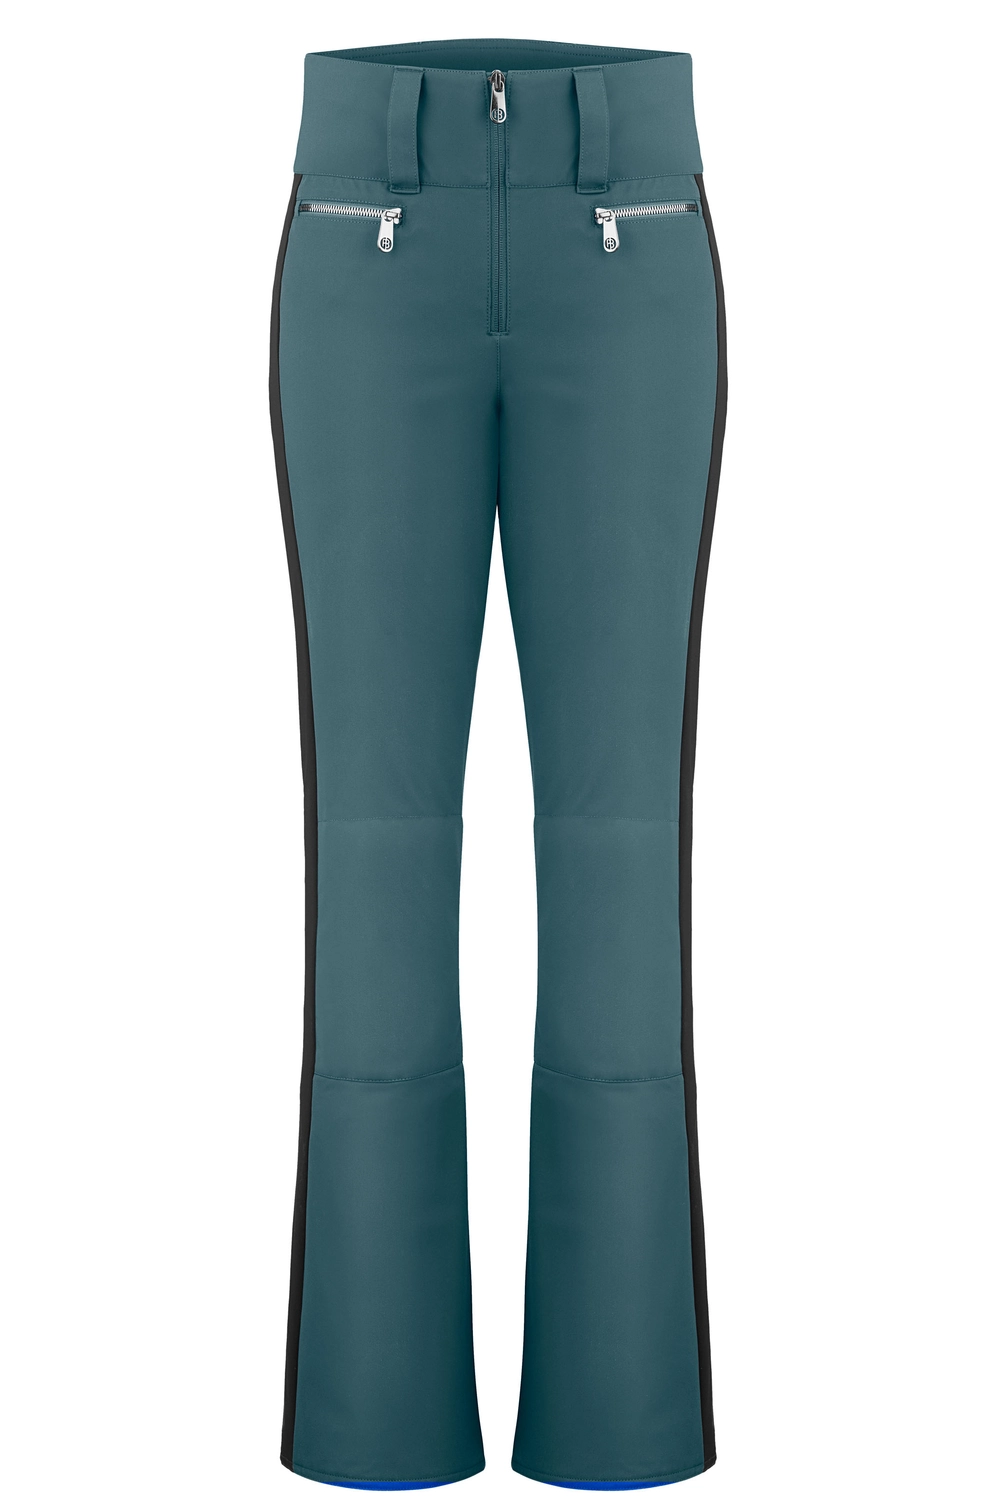 REGULAR LENGTH) Poivre Blanc Women's soft shell stretch ski pants